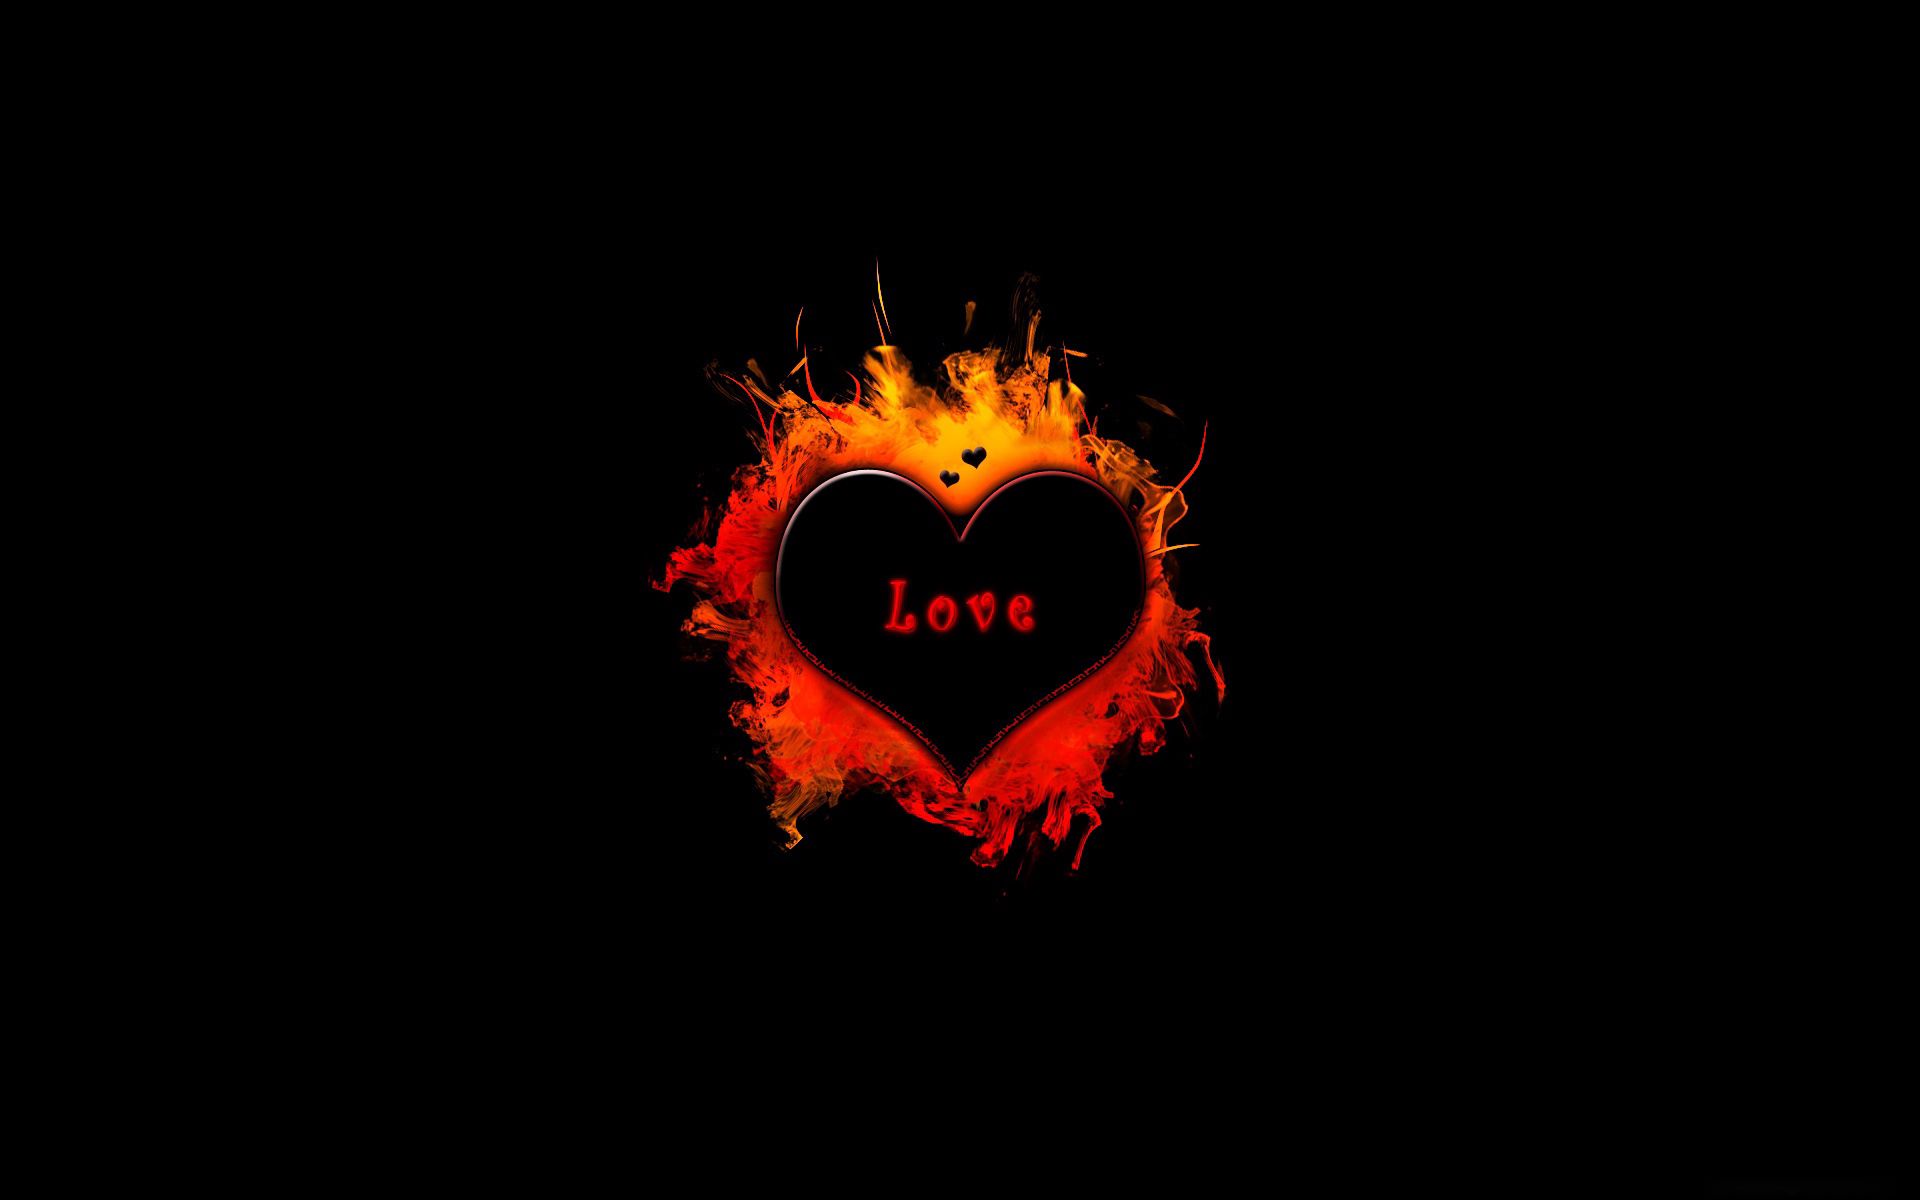 shadow, heart, love, flame, fire